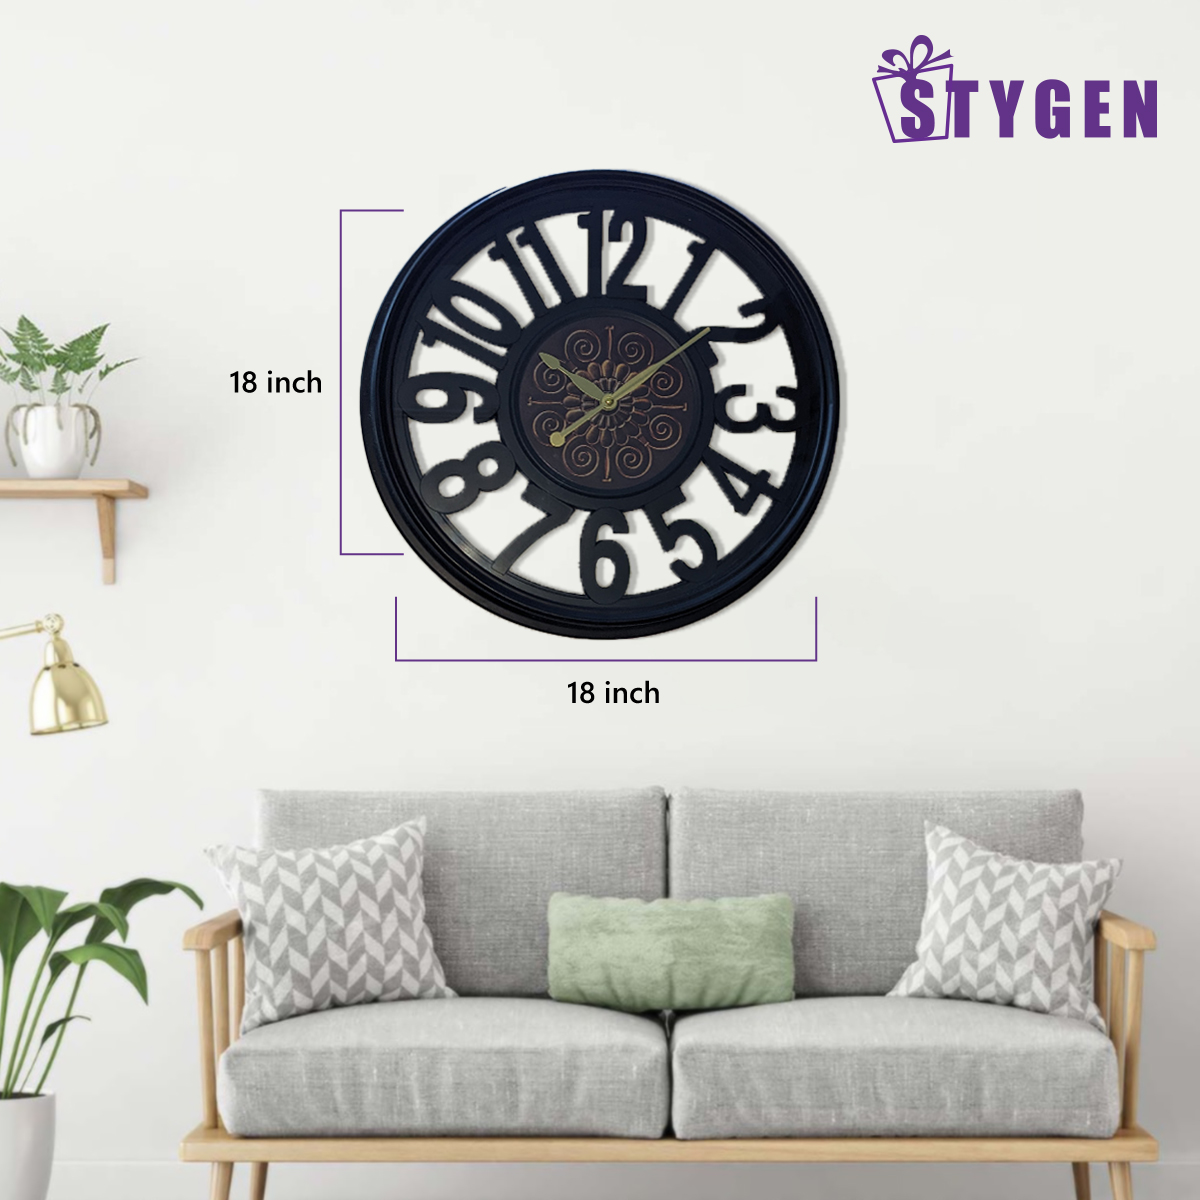 18" Decorative Wall Clock